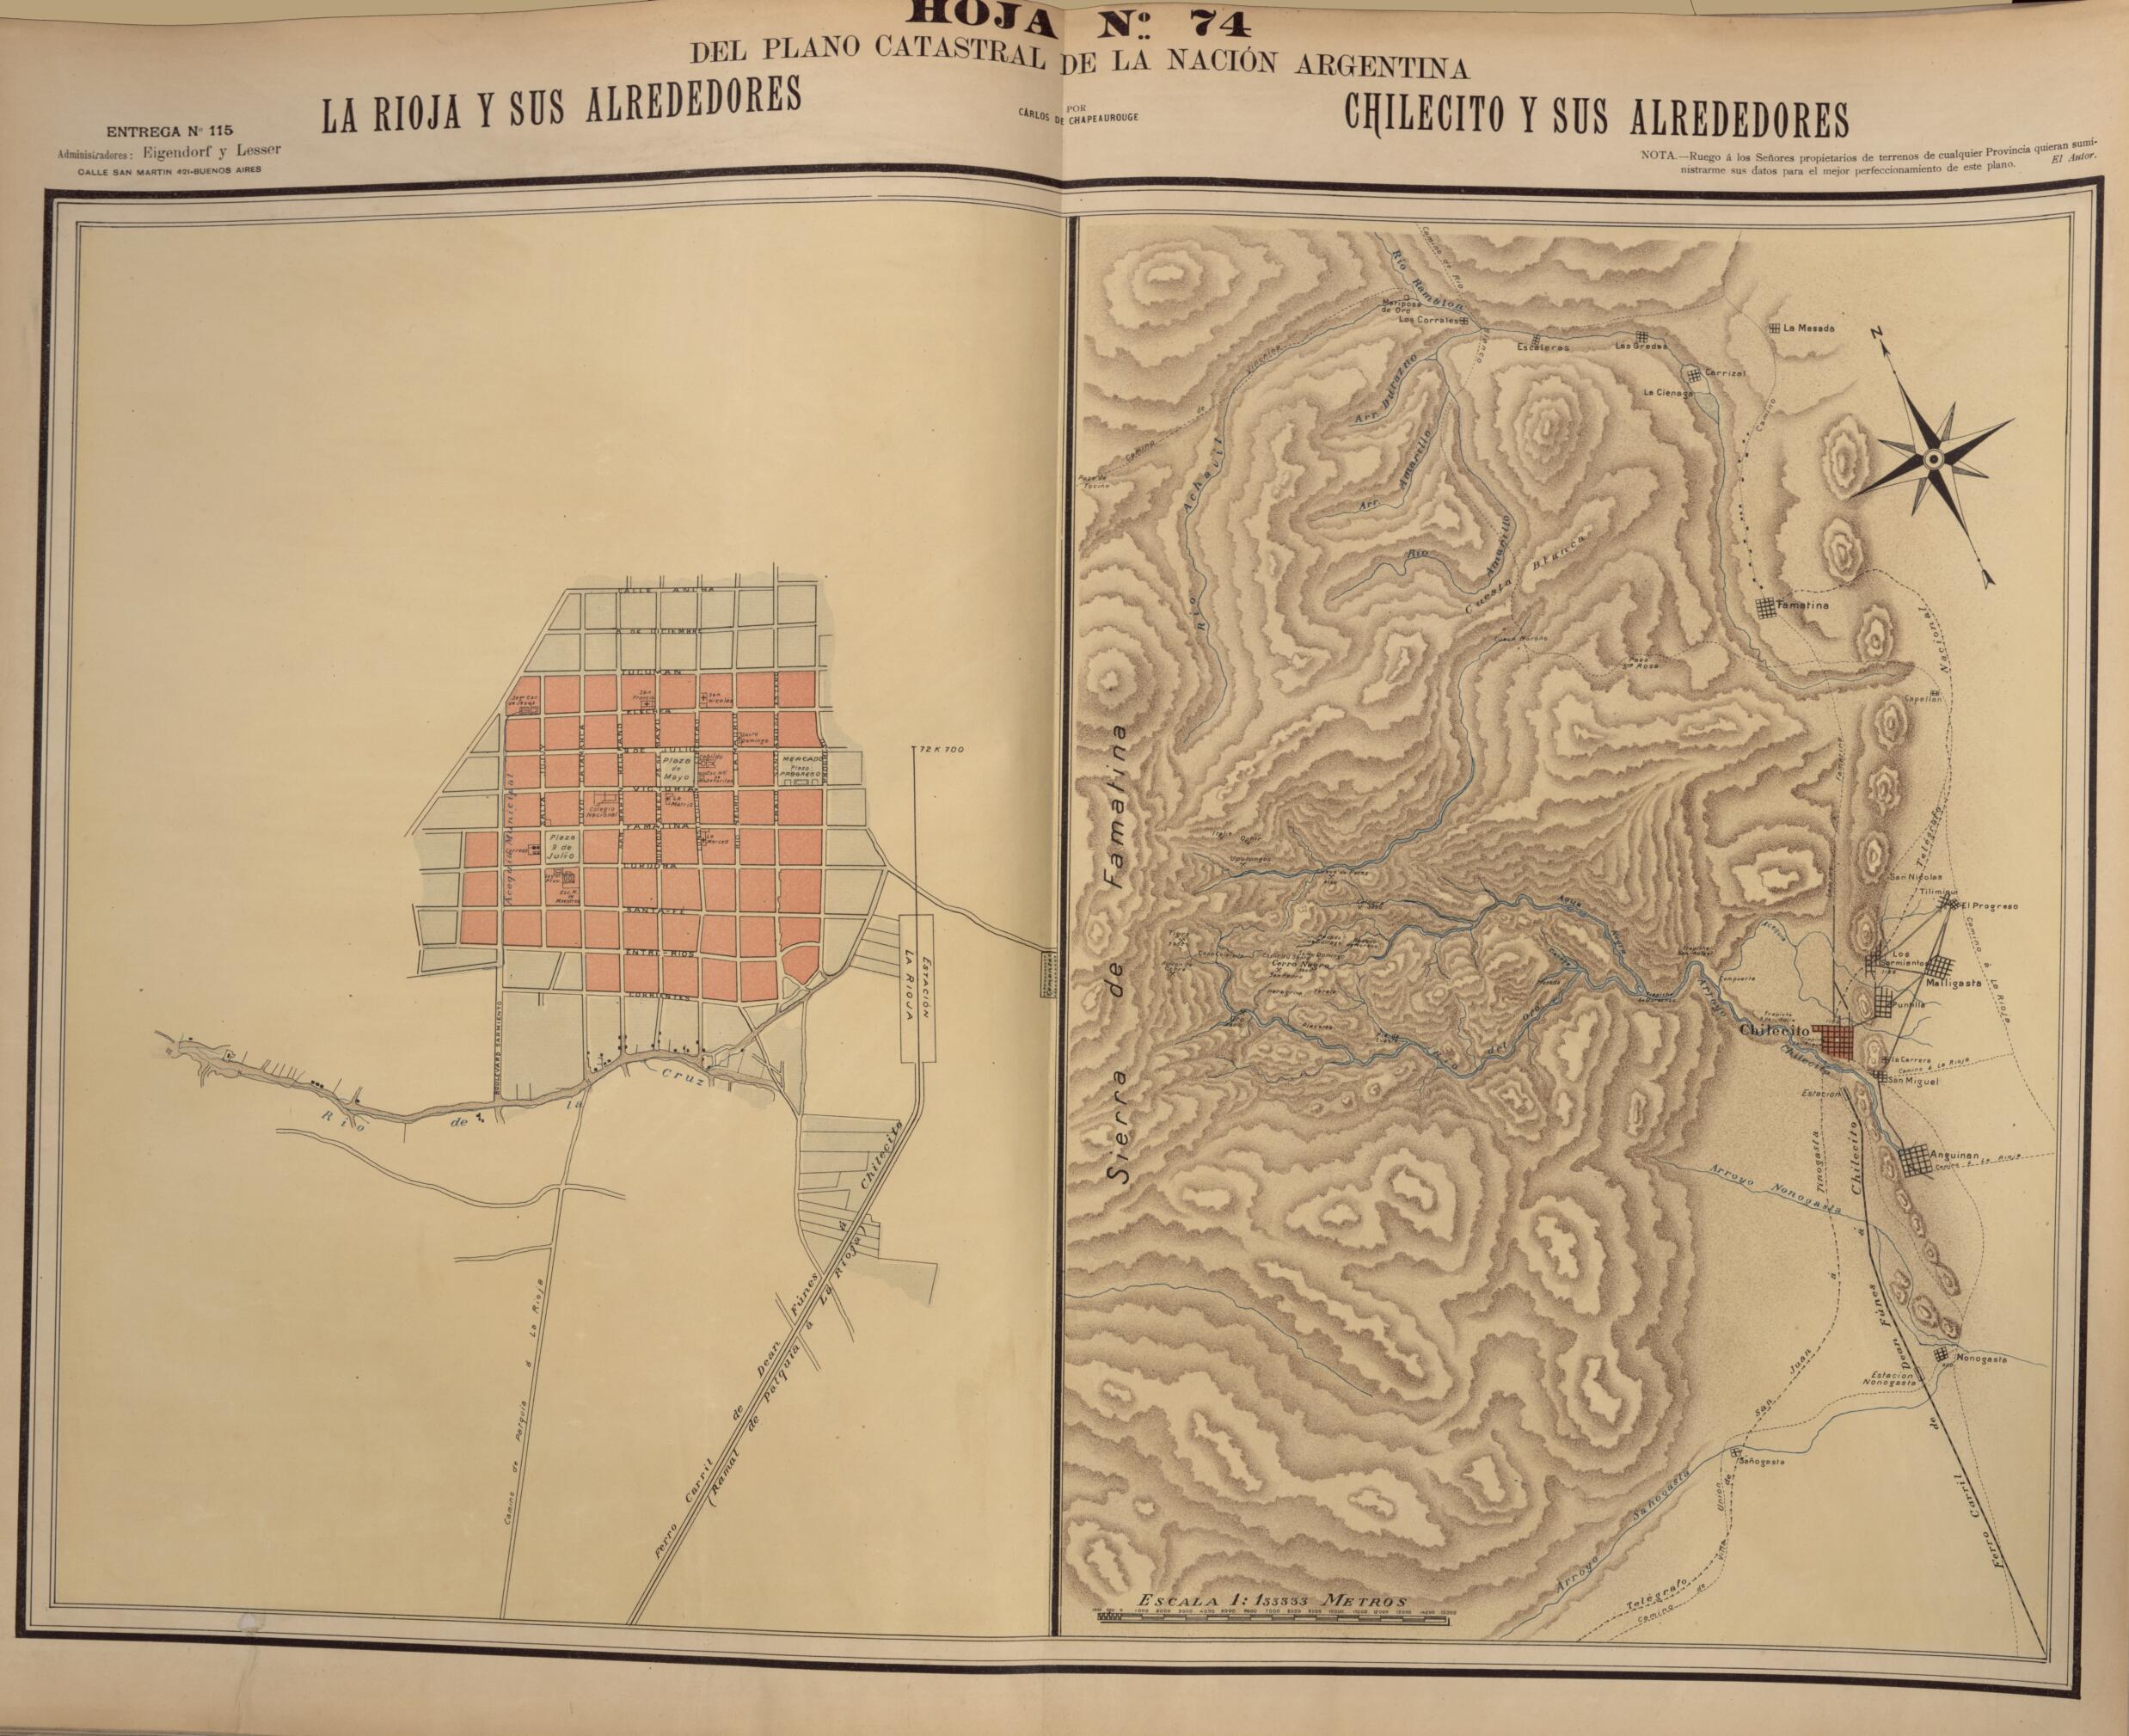 This old map of Plano Catastral De La Nacion Hoja No. 74 from República Argentina from 1905 was created by Carlos De Chapeaurouge in 1905